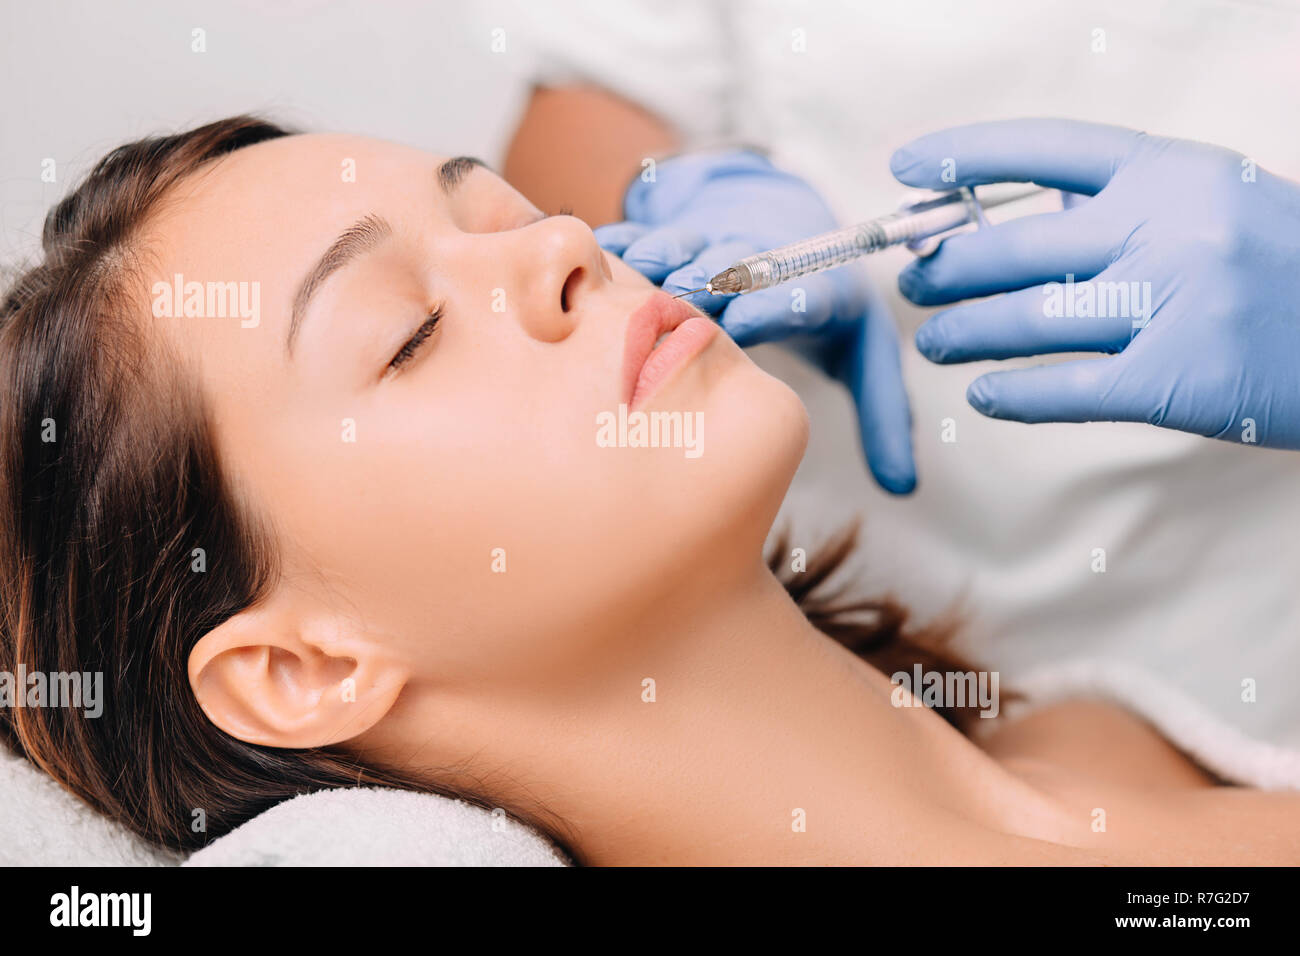 woman having lip injection for lip augmentation Stock Photo